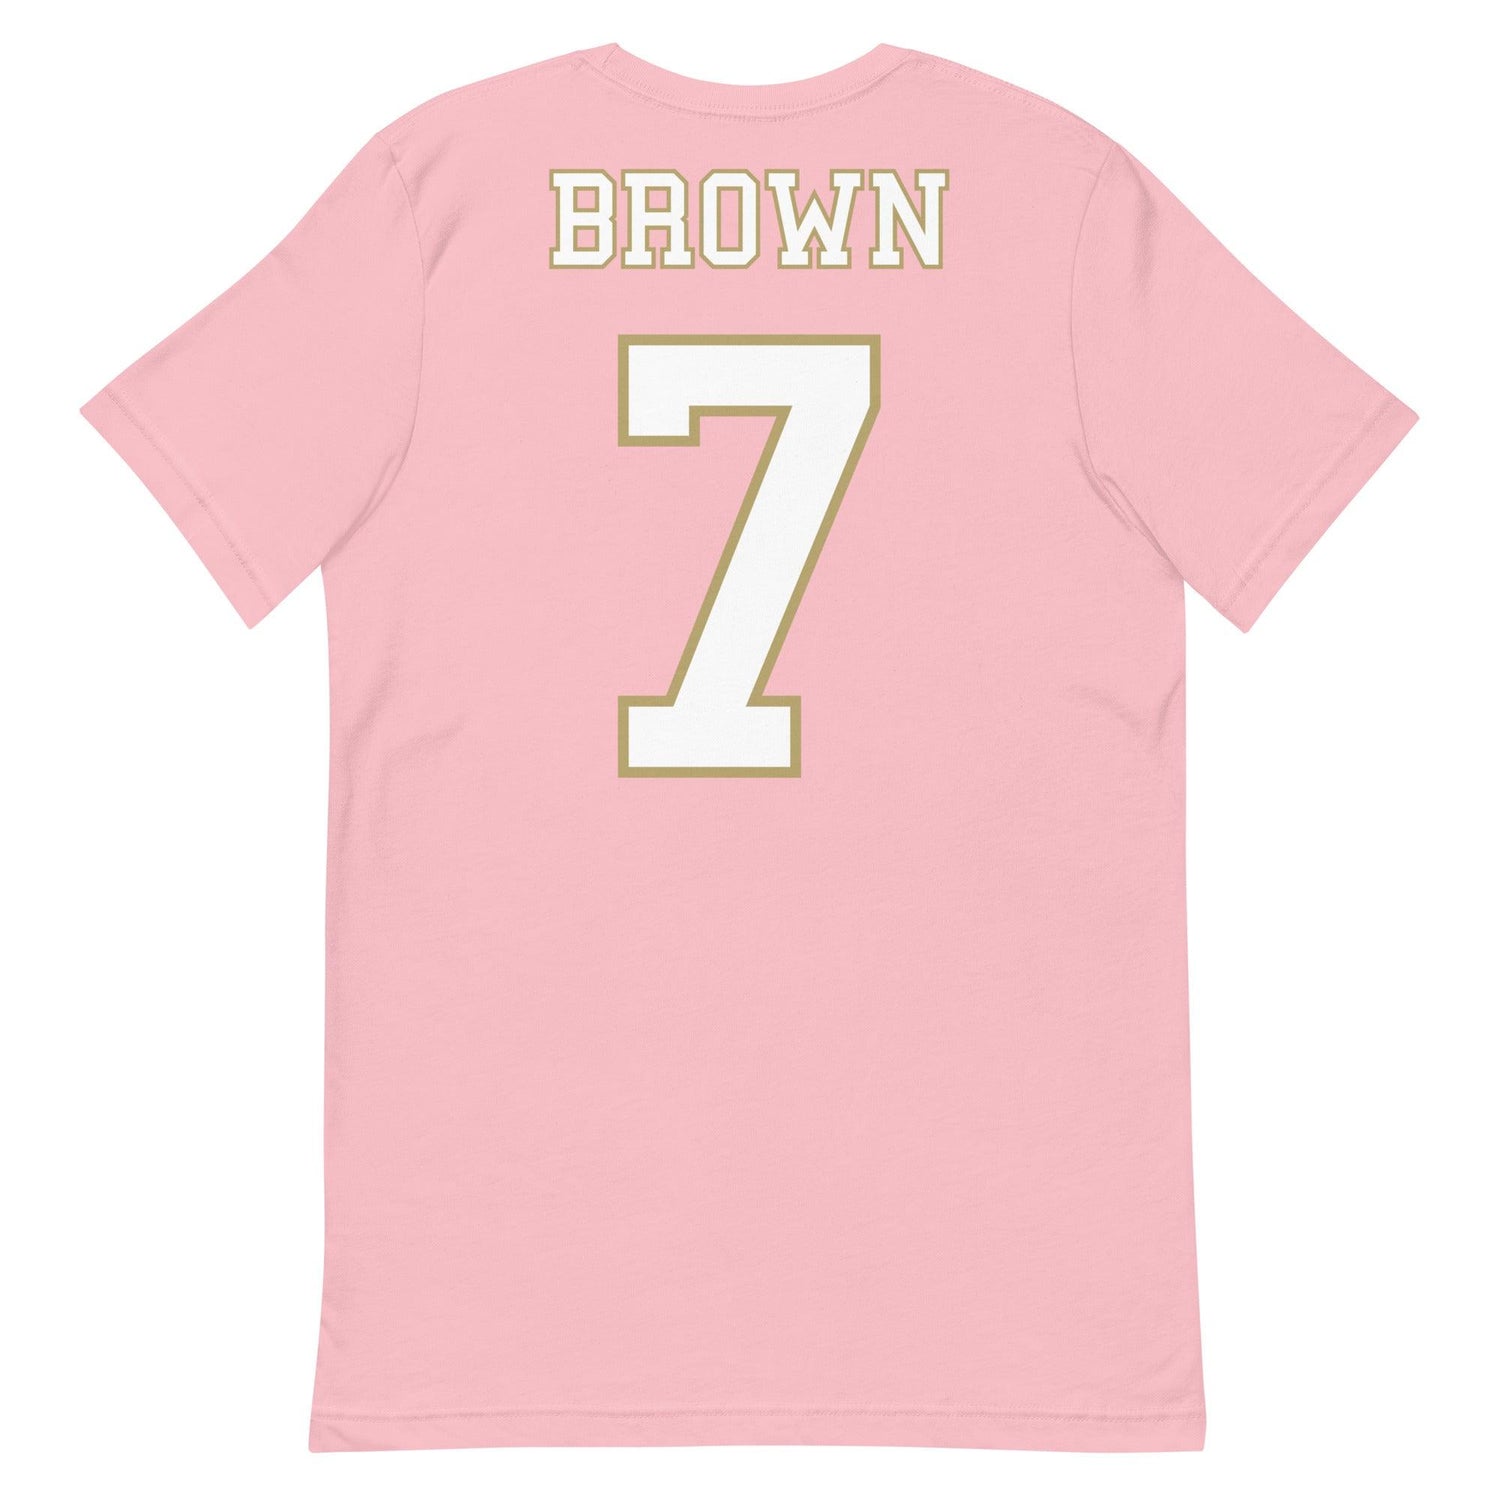 Davonte Brown "Jersey" t-shirt - Fan Arch